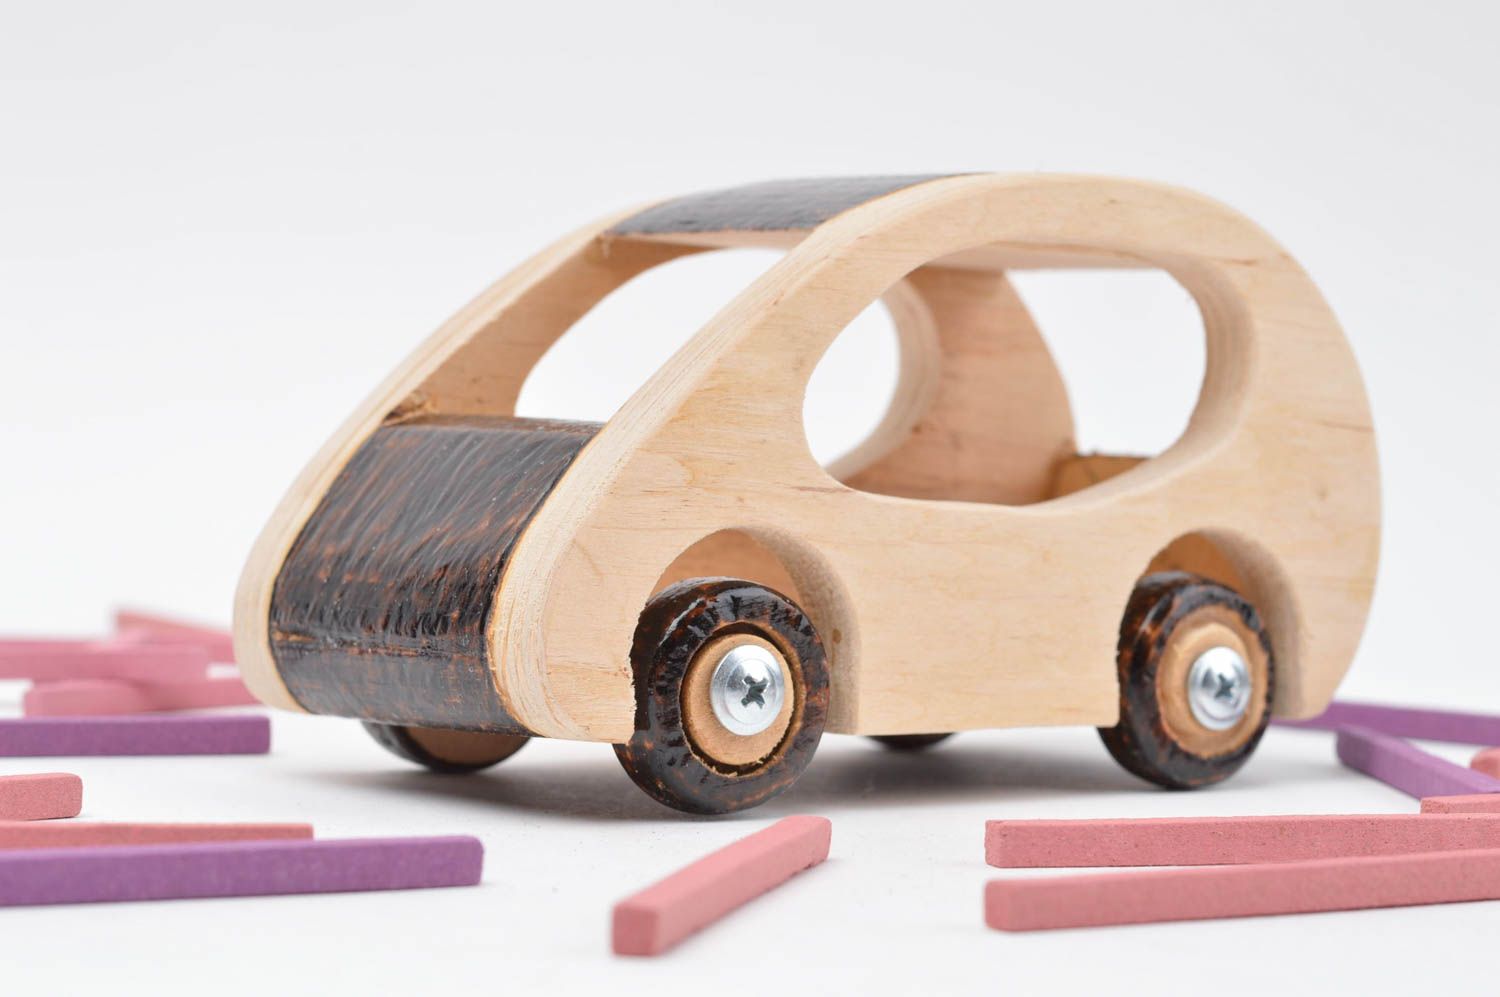 Handmade toy designer toy decor ideas nursery decor gift for baby wooden toy photo 1